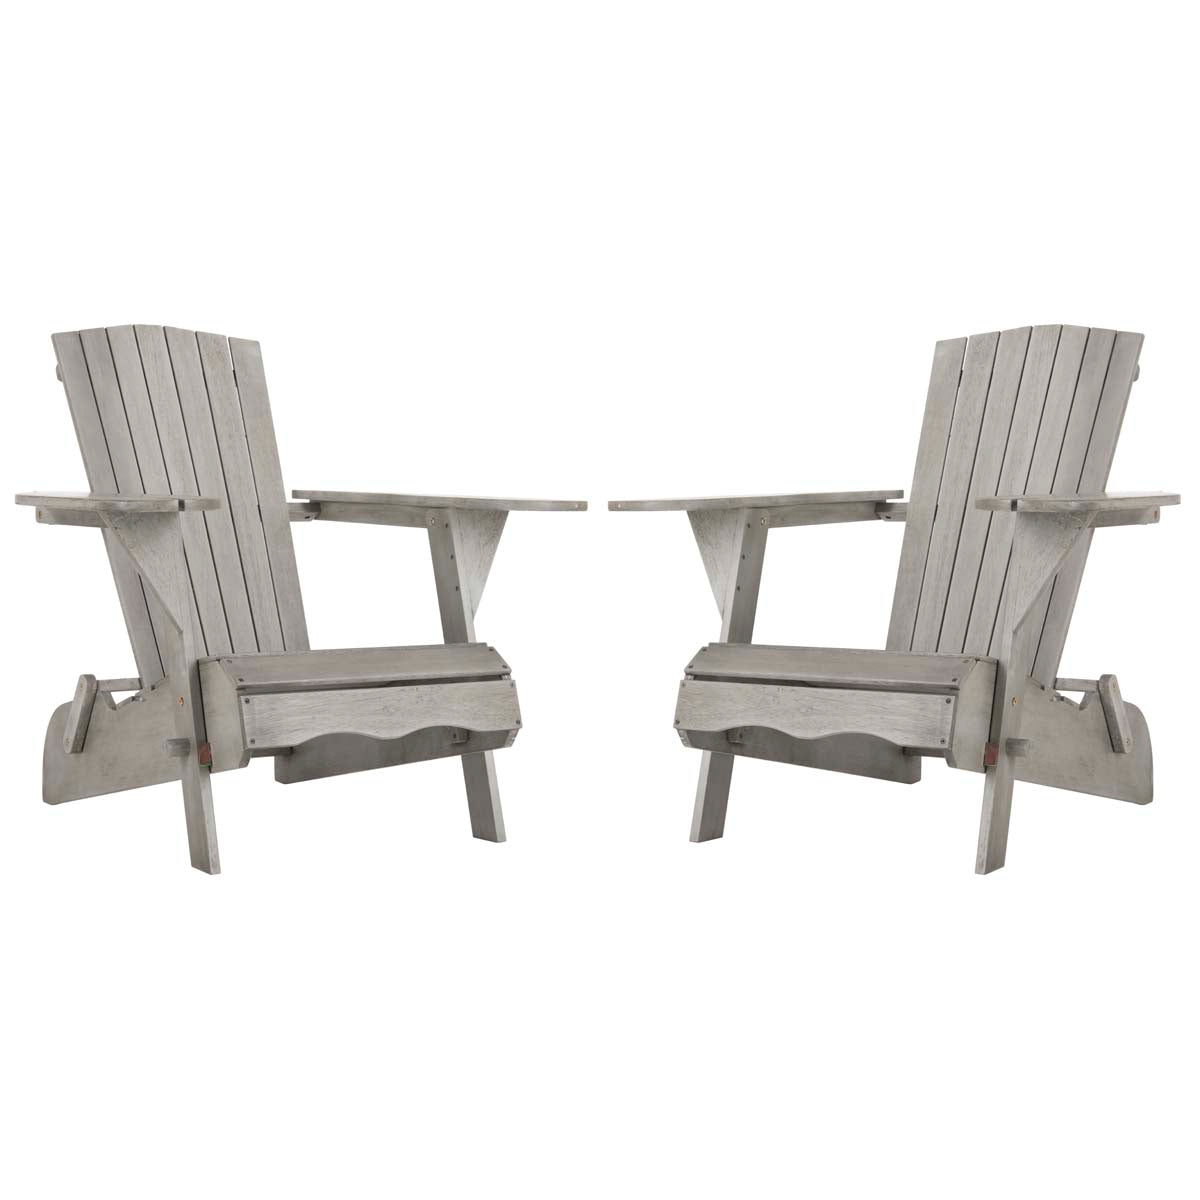 Safavieh Breetel Set Of 2 Adirondack Chairs , PAT7034 - Grey Wash (Set of 2)